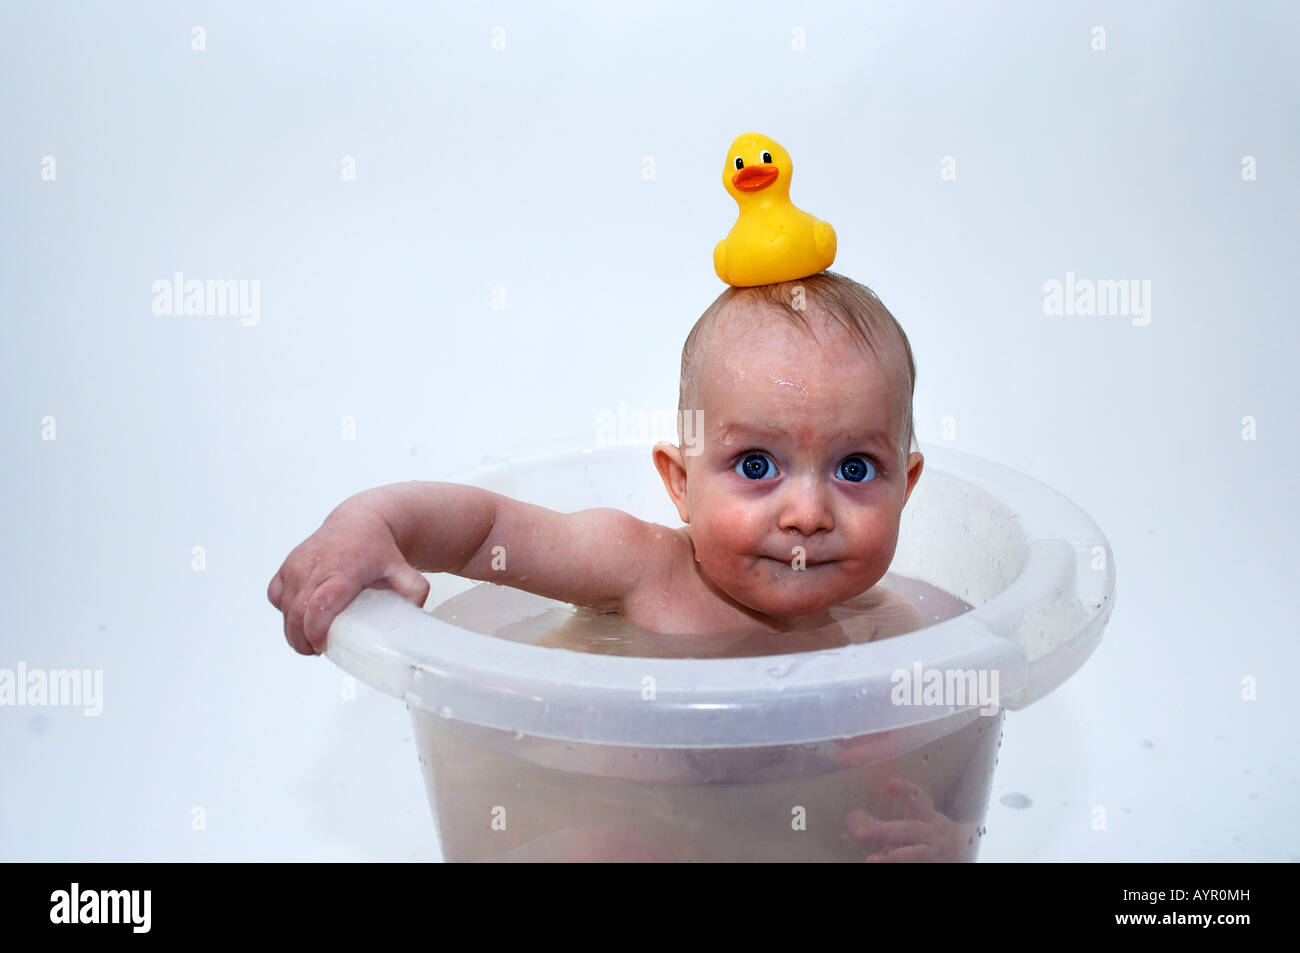 rubber duck baby bath